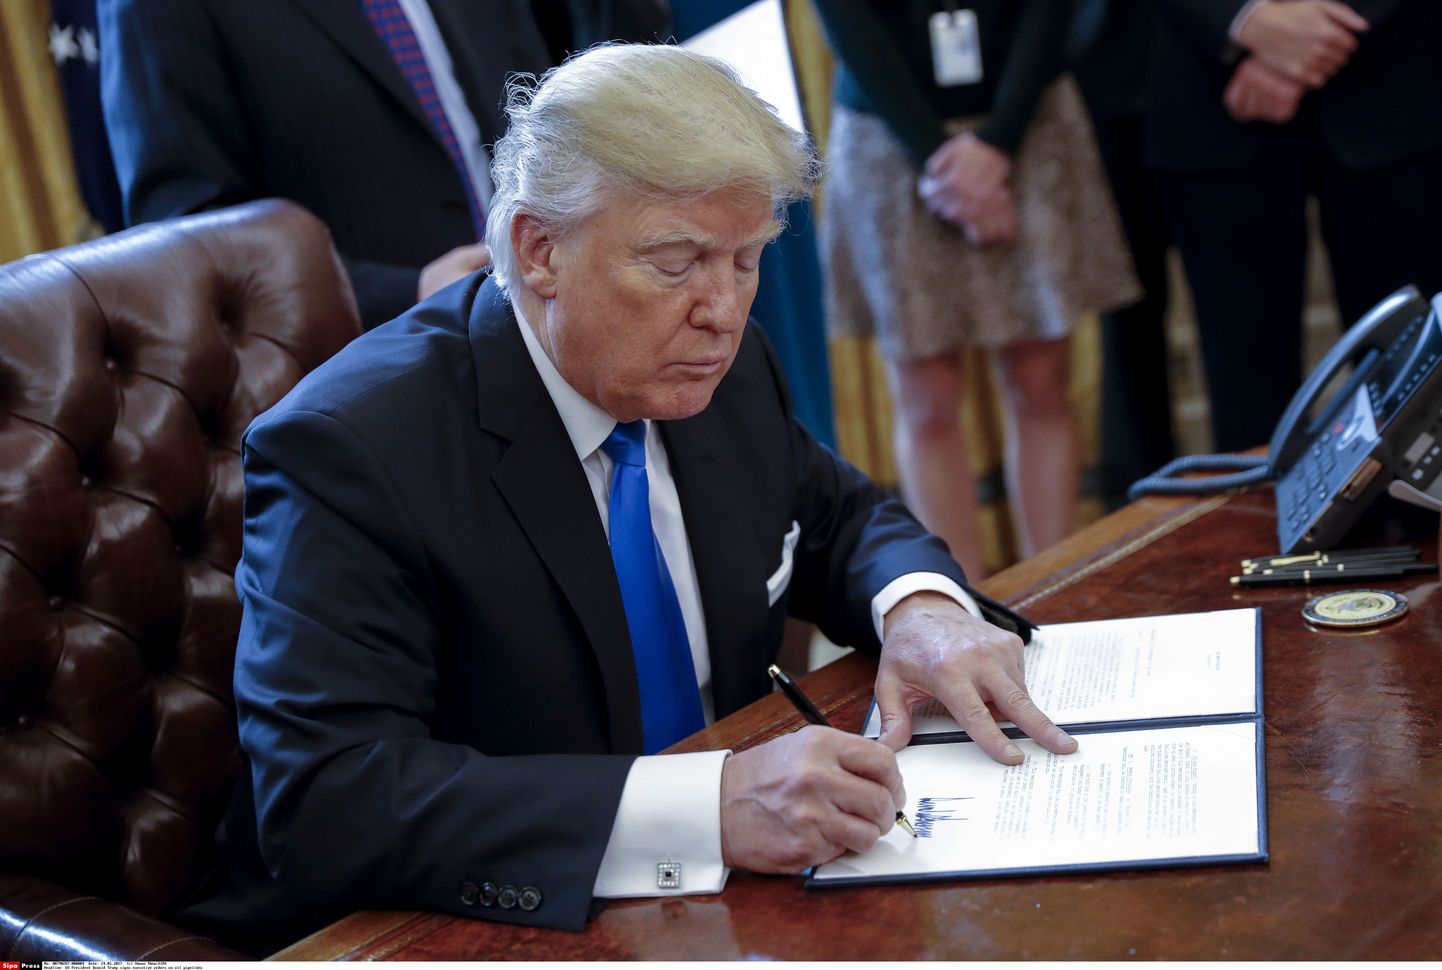 USA president Donald Trump allkirjastab dokumenti.